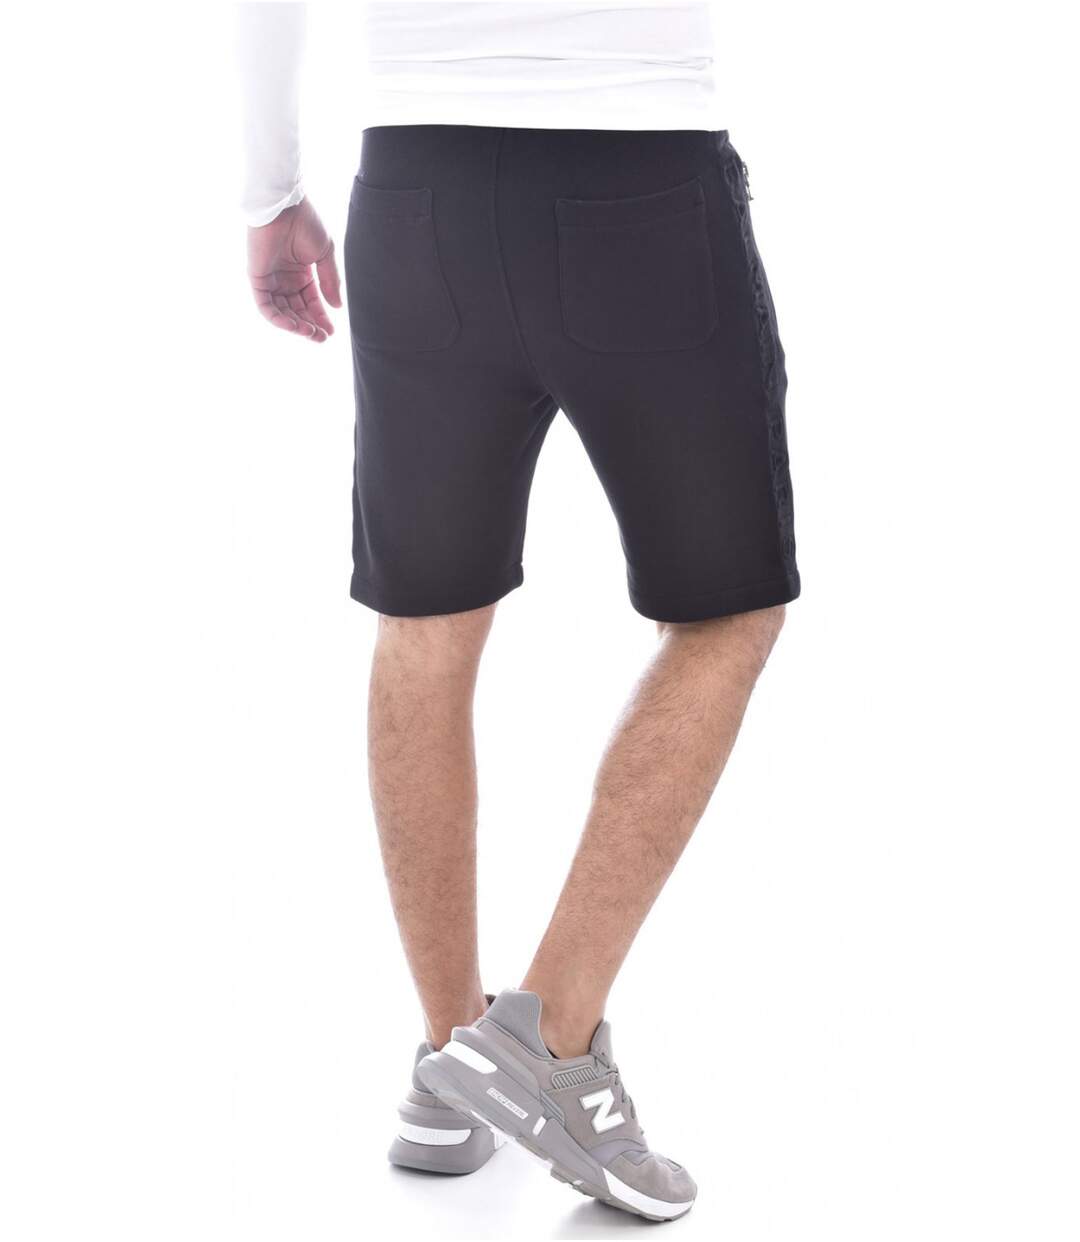 Short en coton sportswear   -  Balmain - Homme